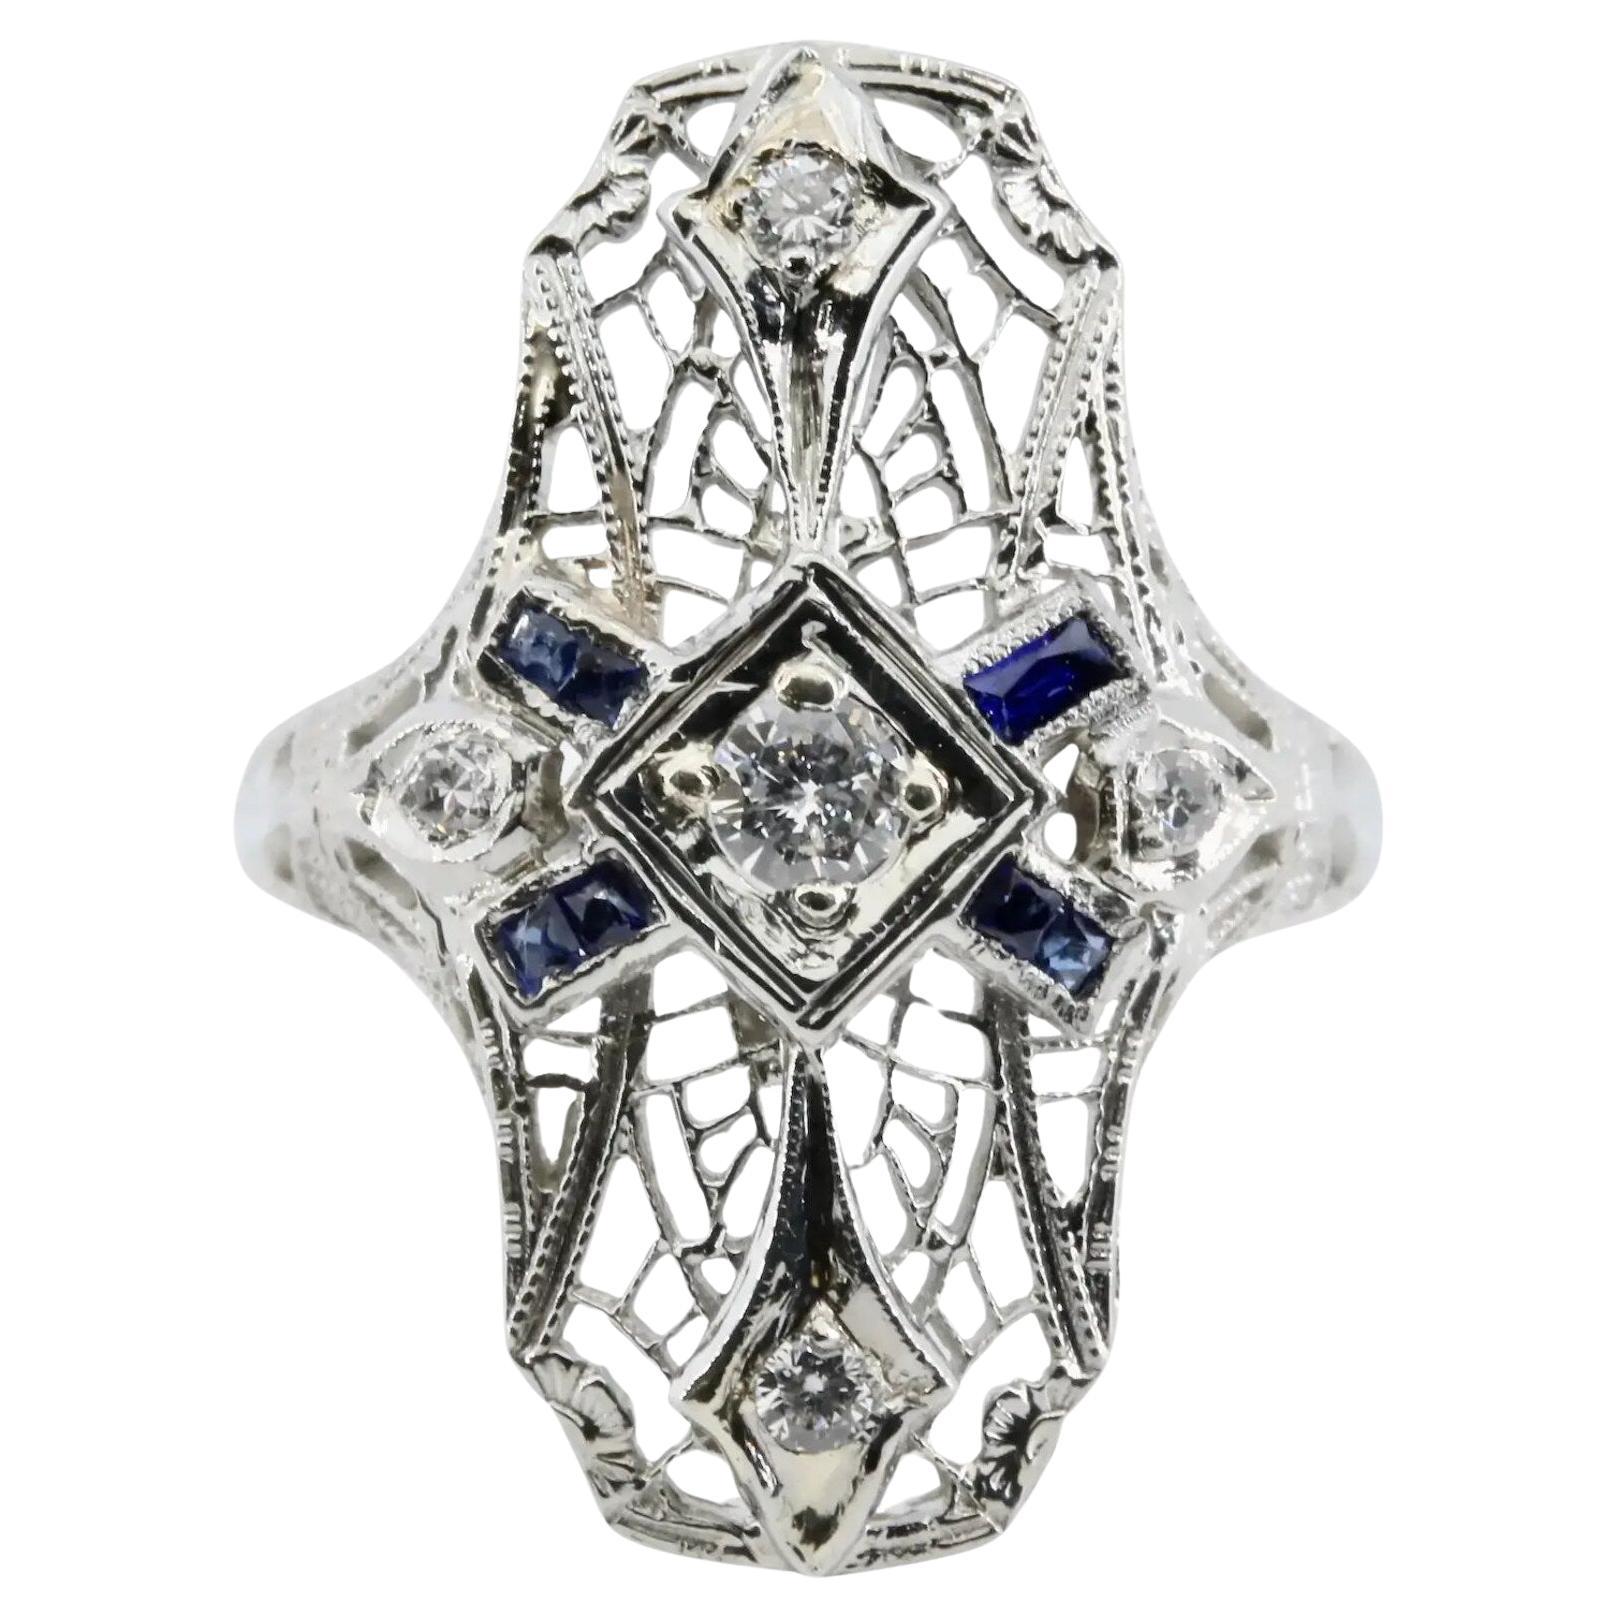 Art Deco Old European Cut Diamond & French Cut Sapphire Filigree Cocktail Ring 